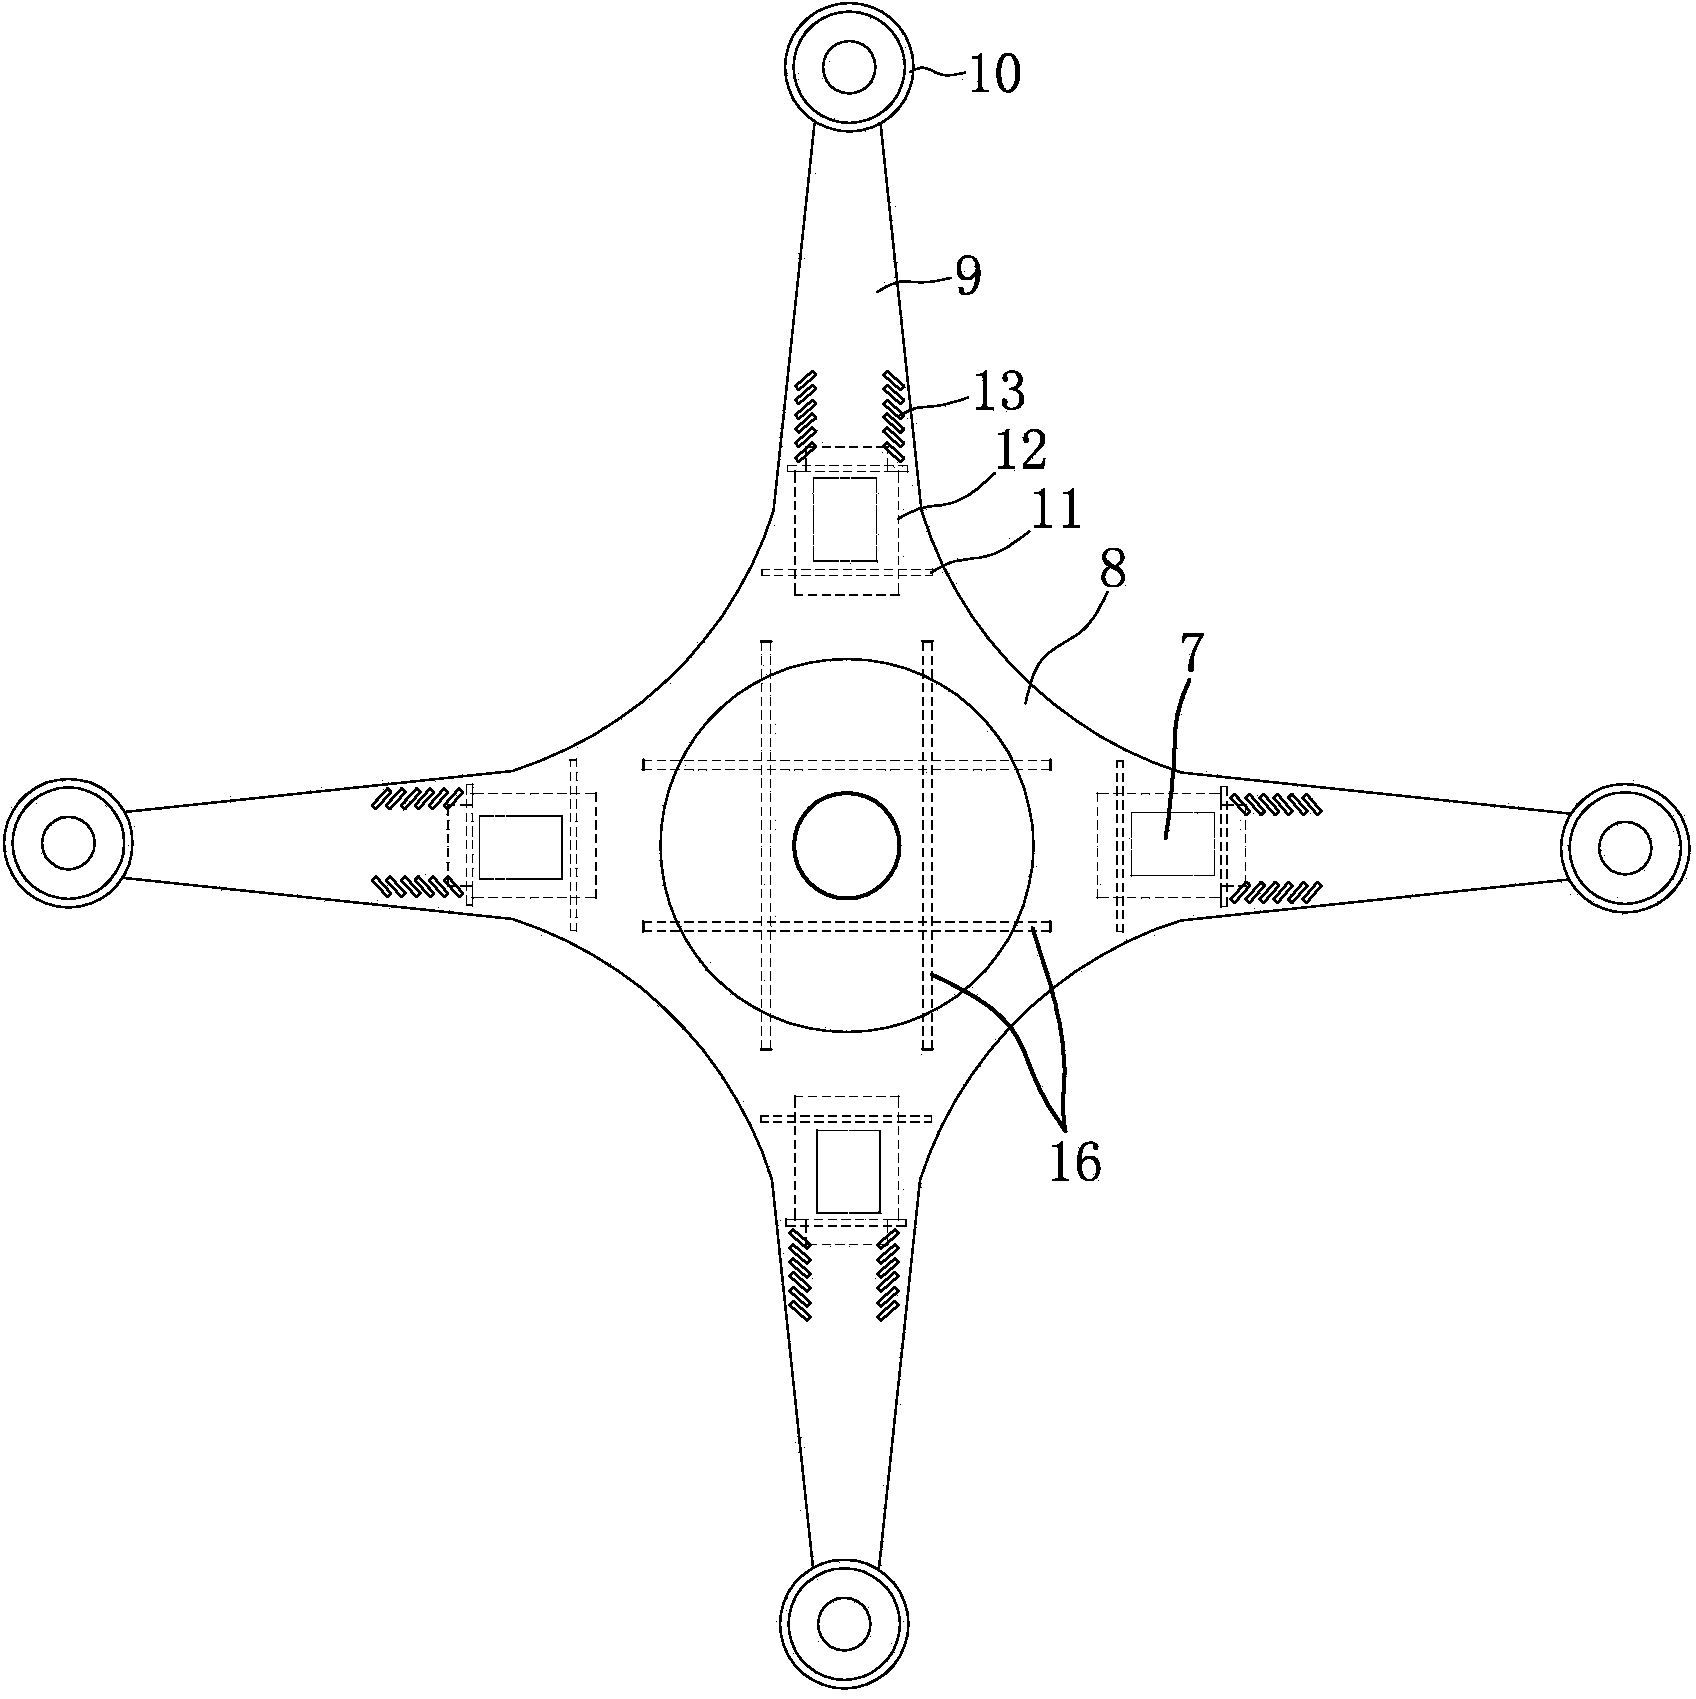 Four-shaft type flight device body assembly